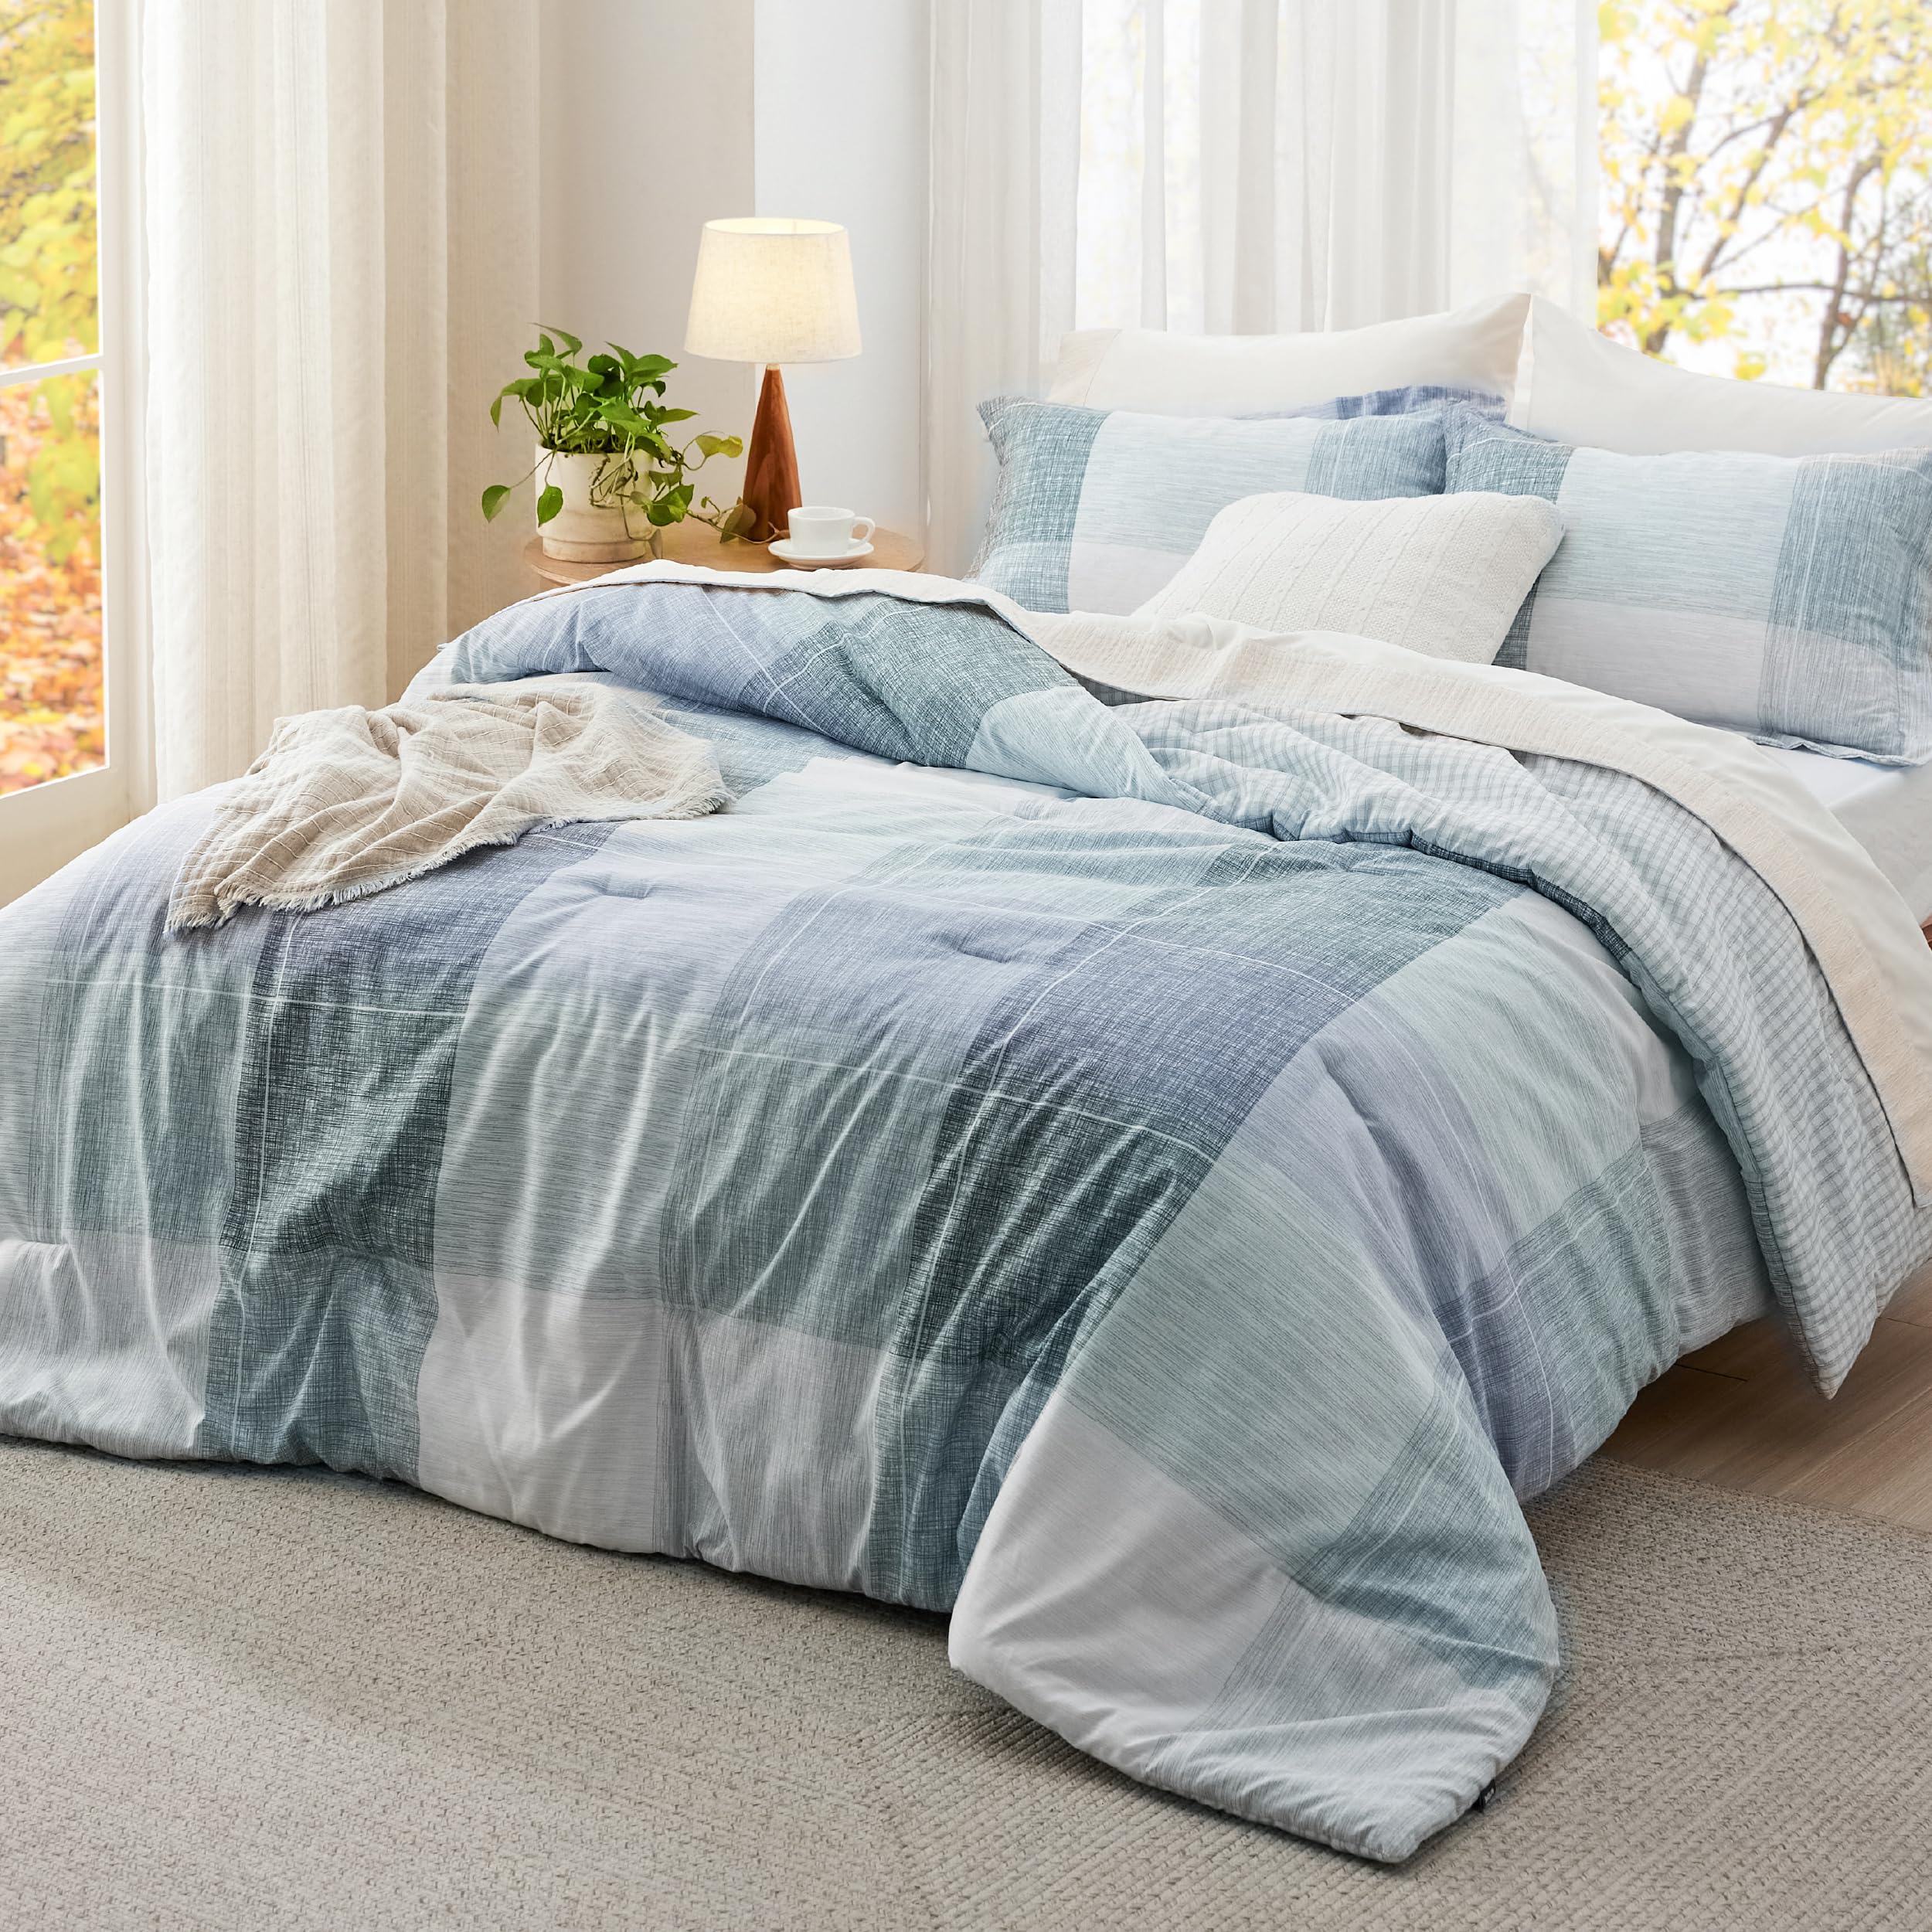 Plaid Comforter Set - Bedding Comforter Set Queen, Reversible Blue Buffalo Plaid Grid Comforter